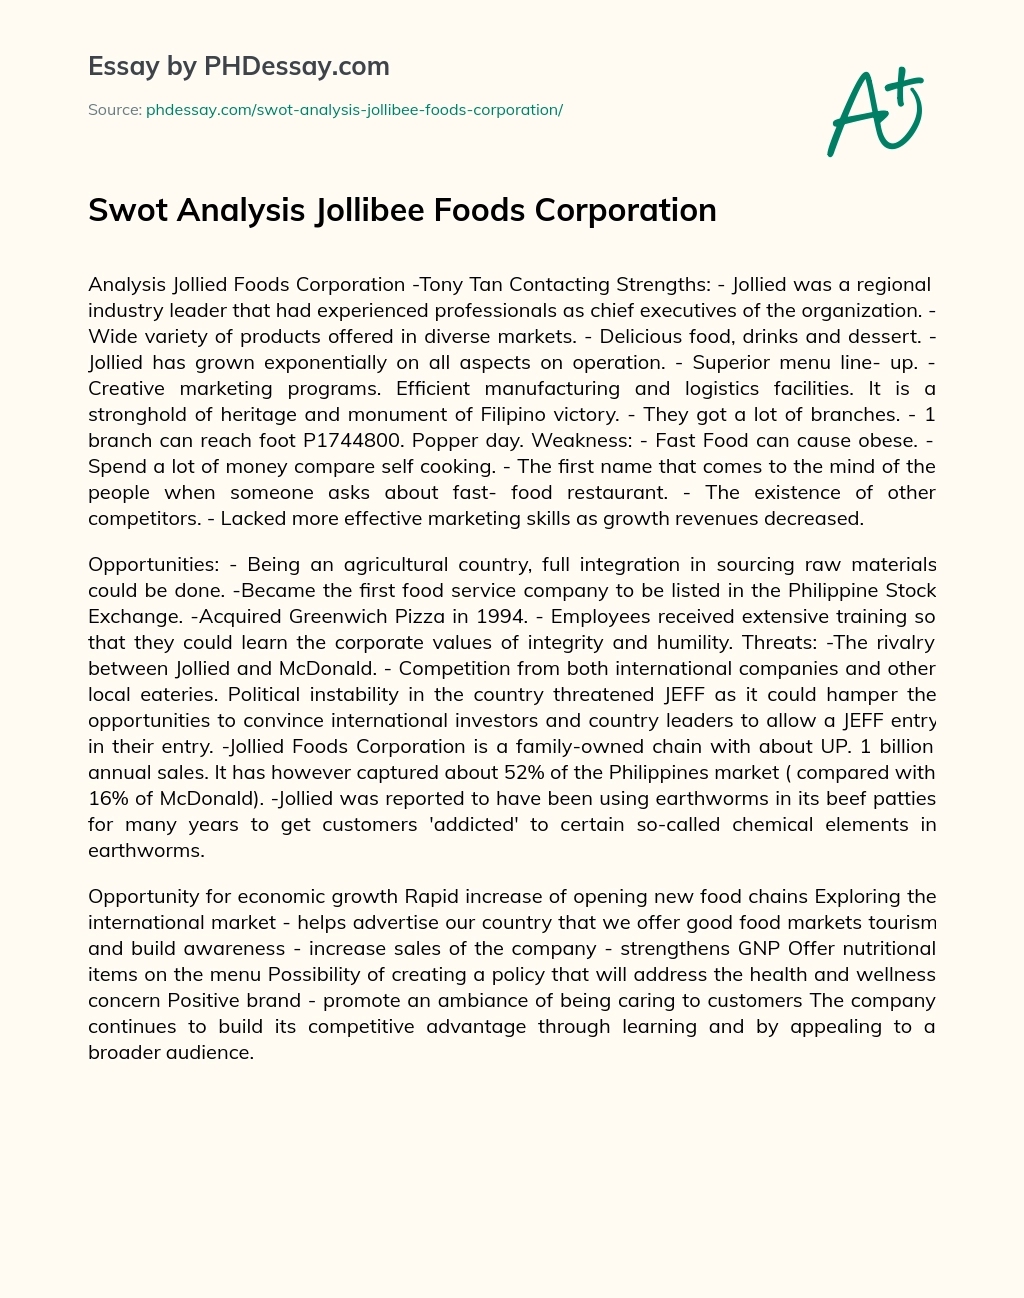 Swot Analysis Jollibee Foods Corporation essay